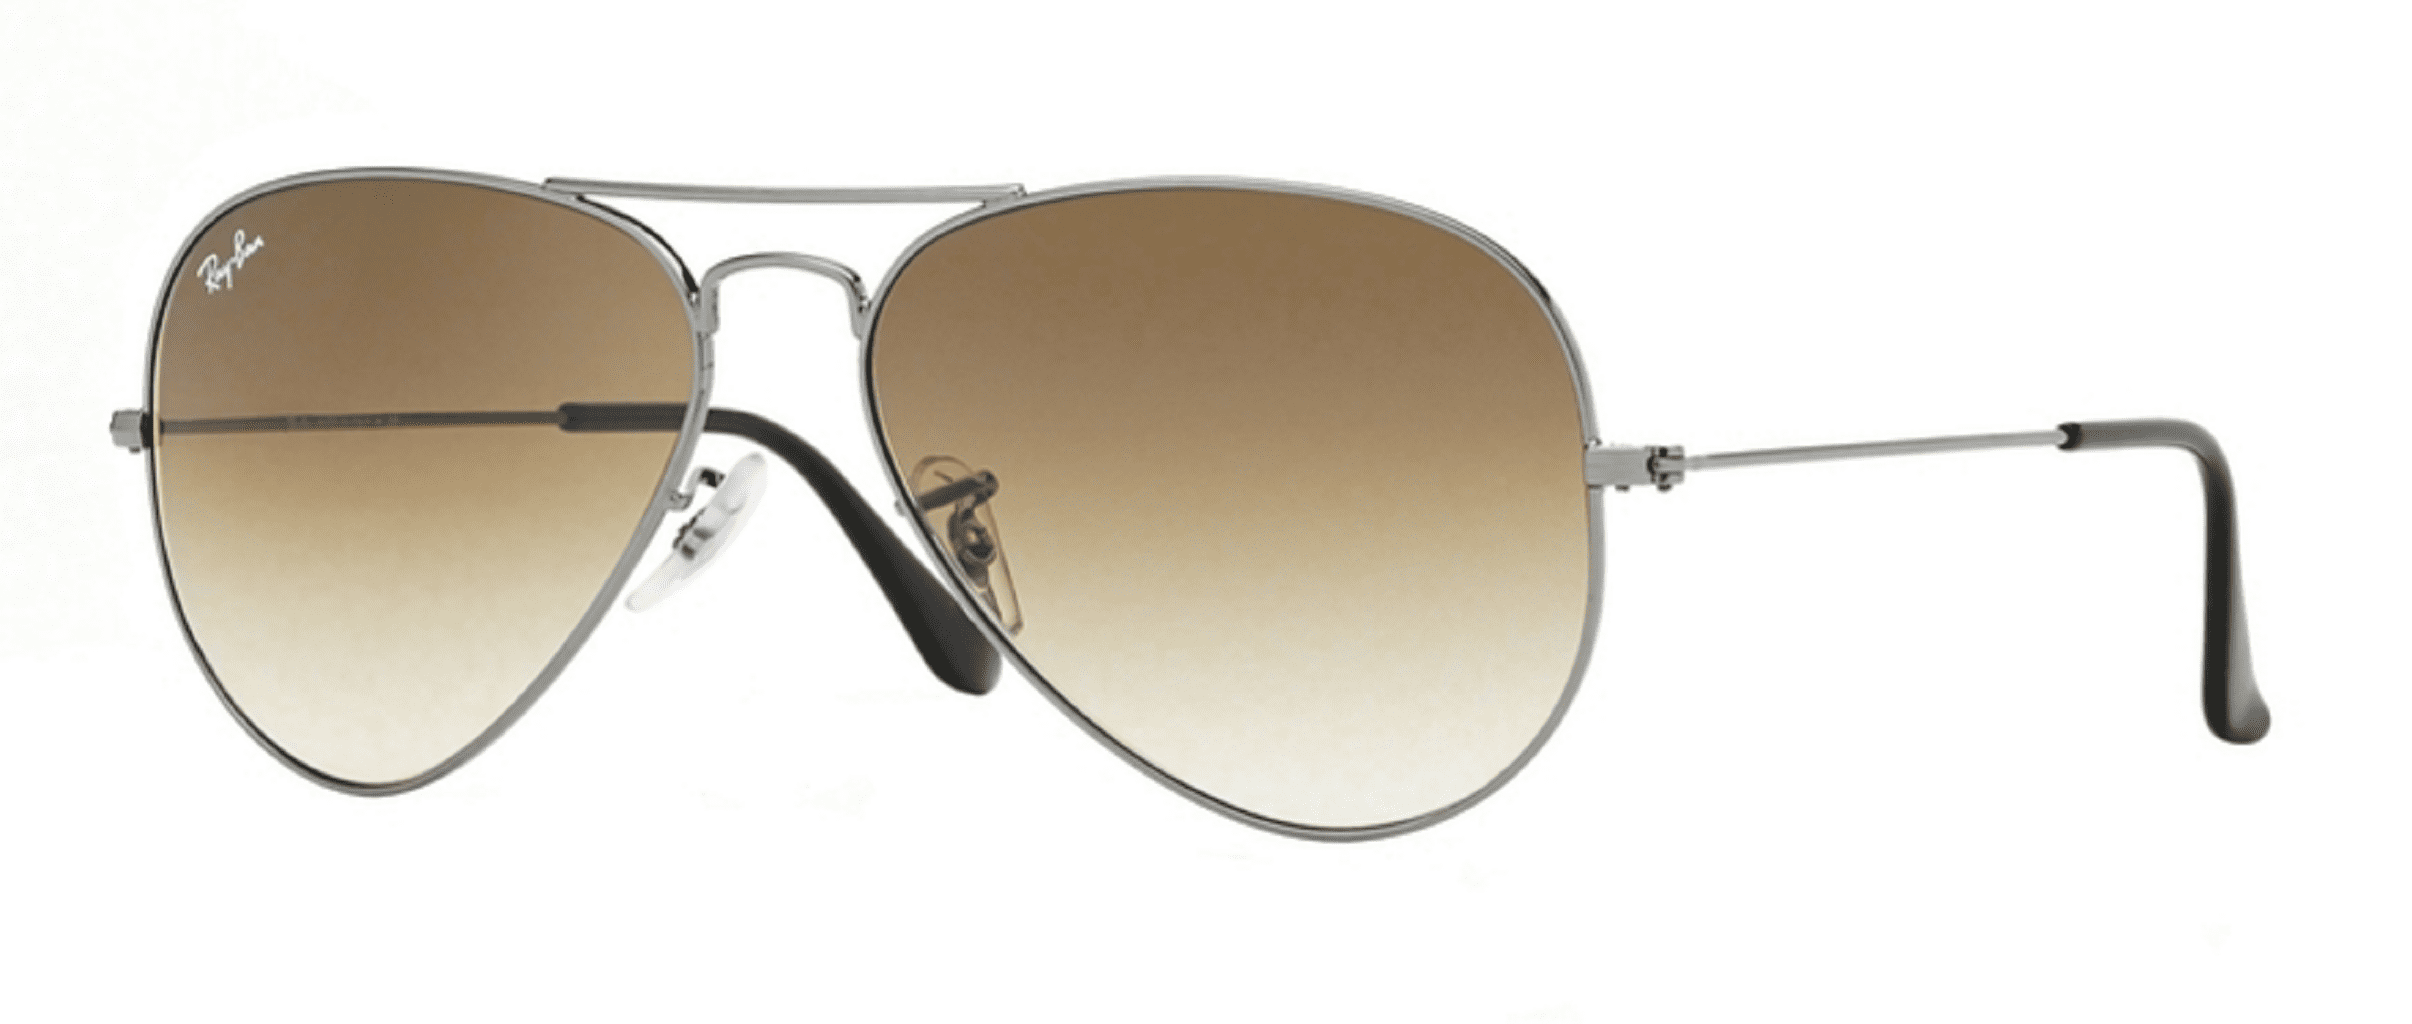 Ray-Ban RB3025 AVIATOR CLASSIC Sunglasses